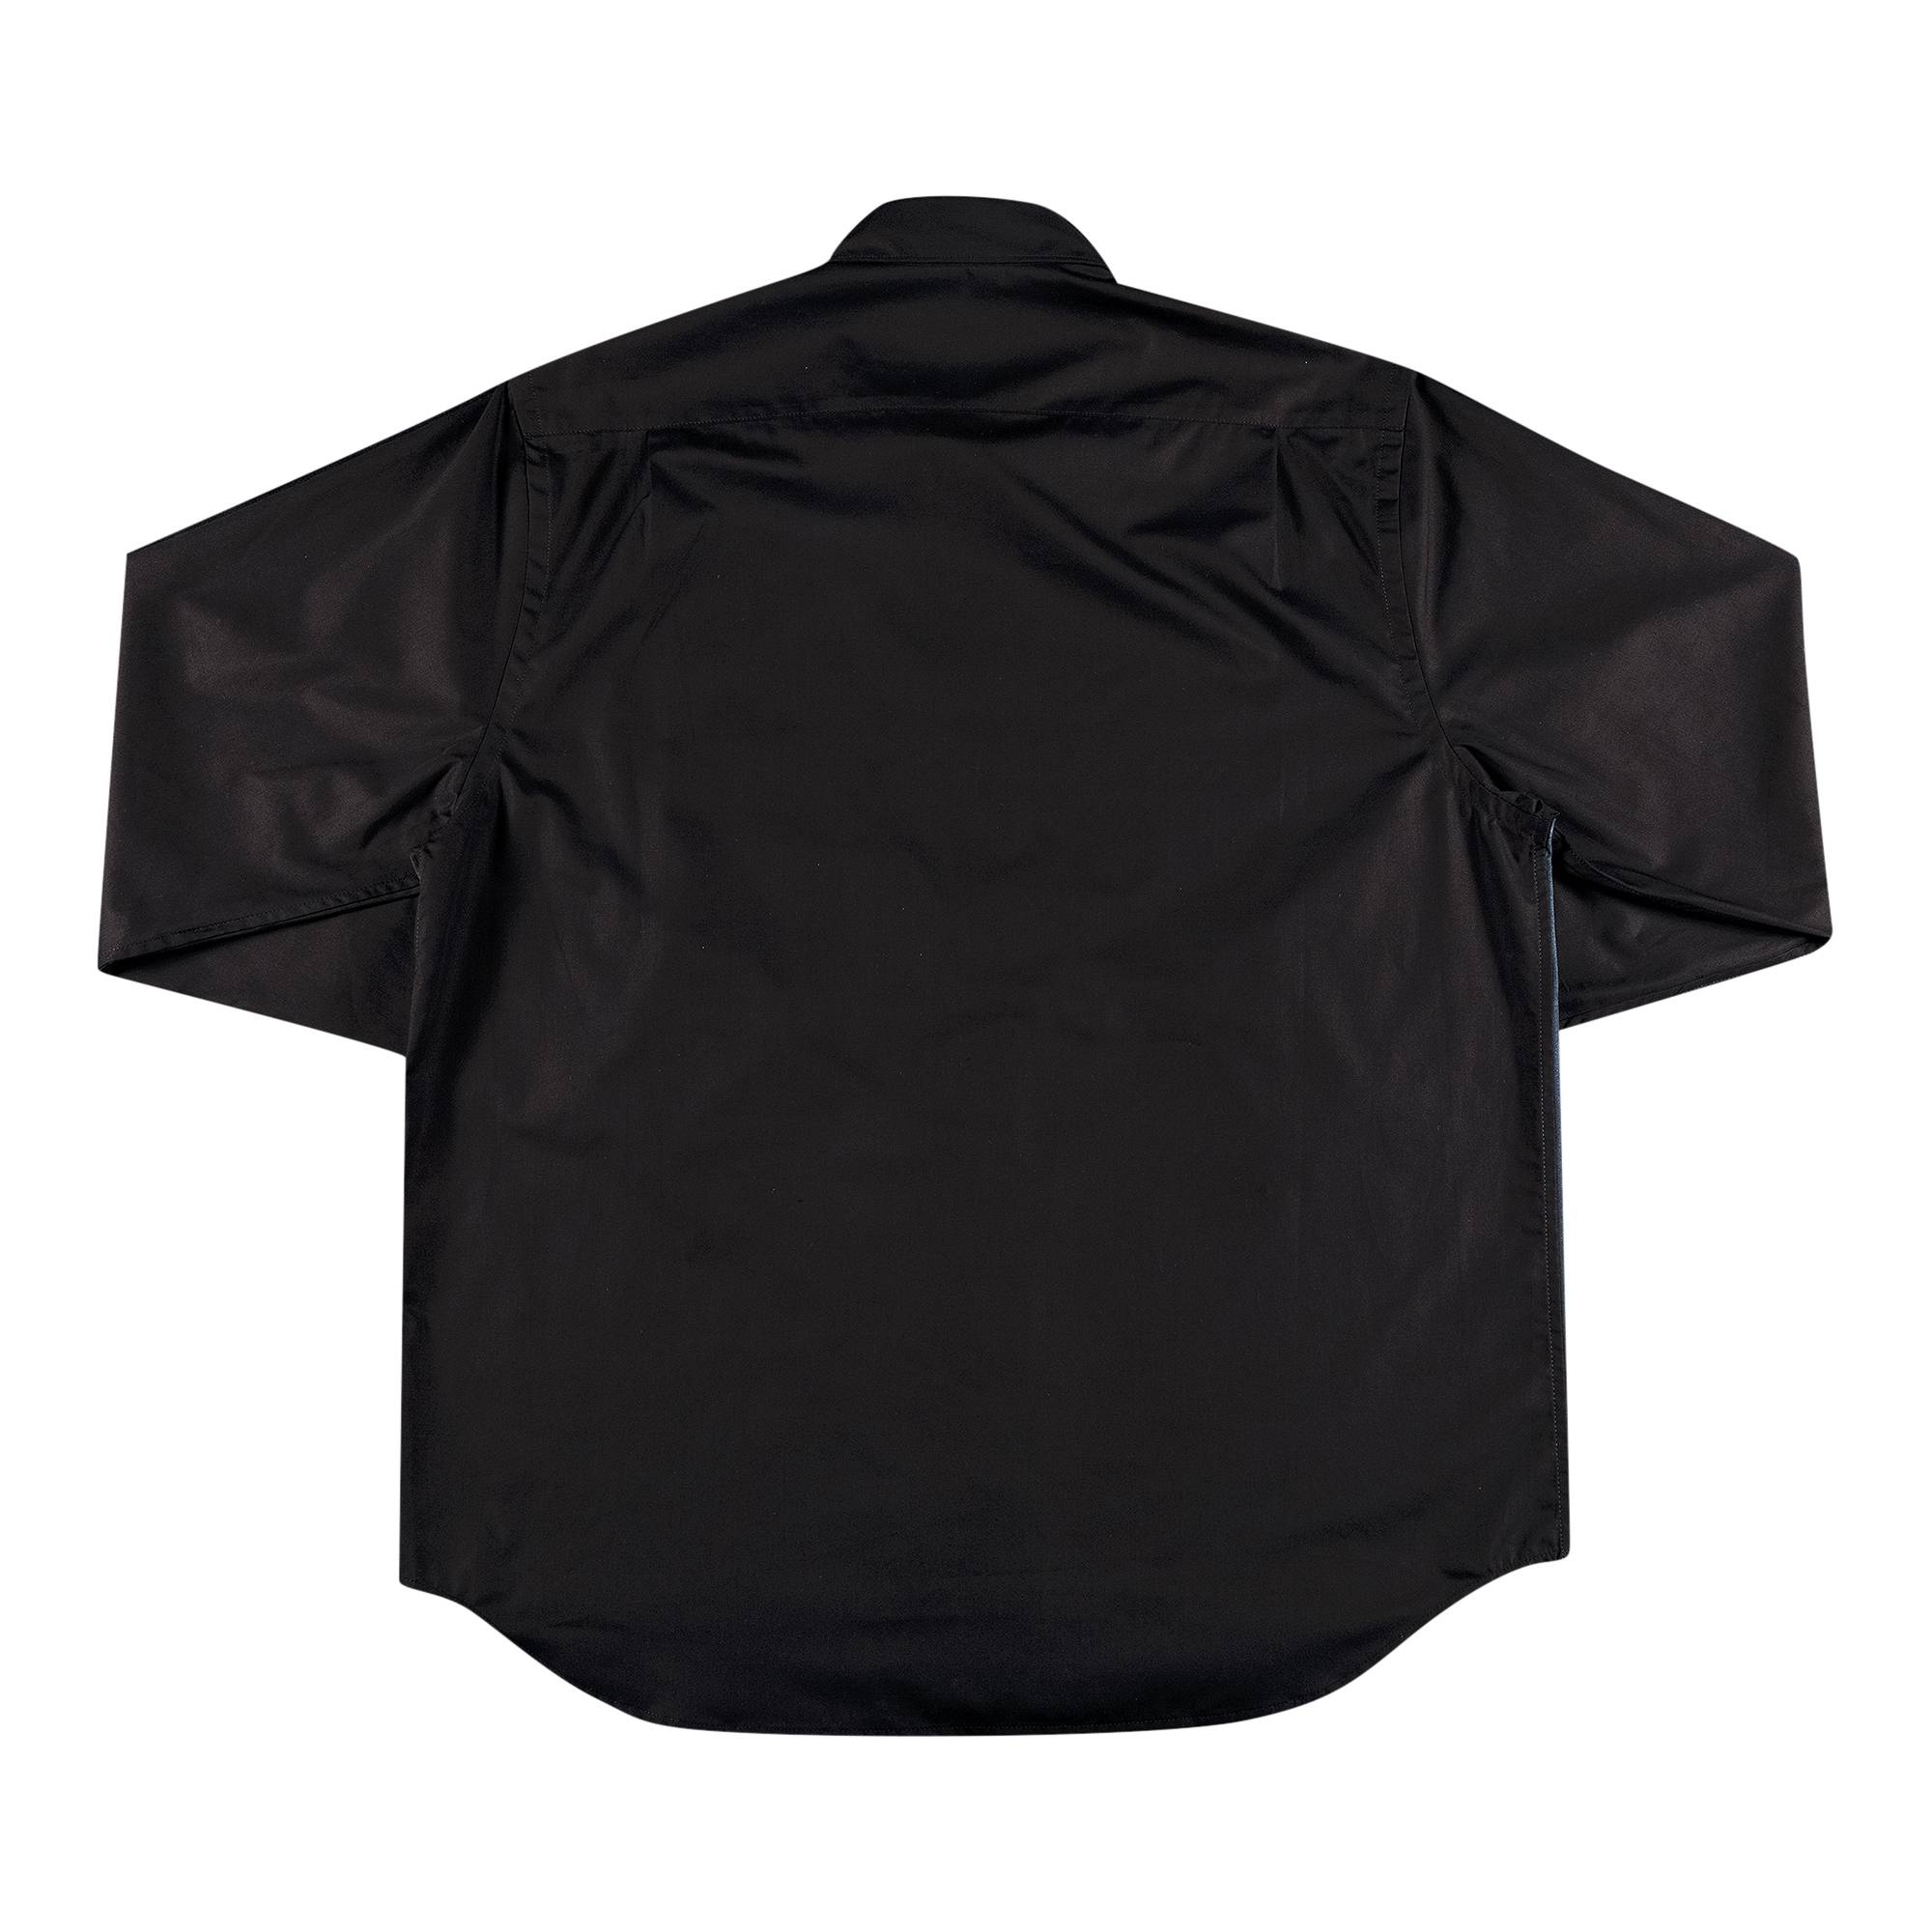 Supreme x Junya Watanabe x Comme des Garçons MAN Nature Shirt 'Black' - 2